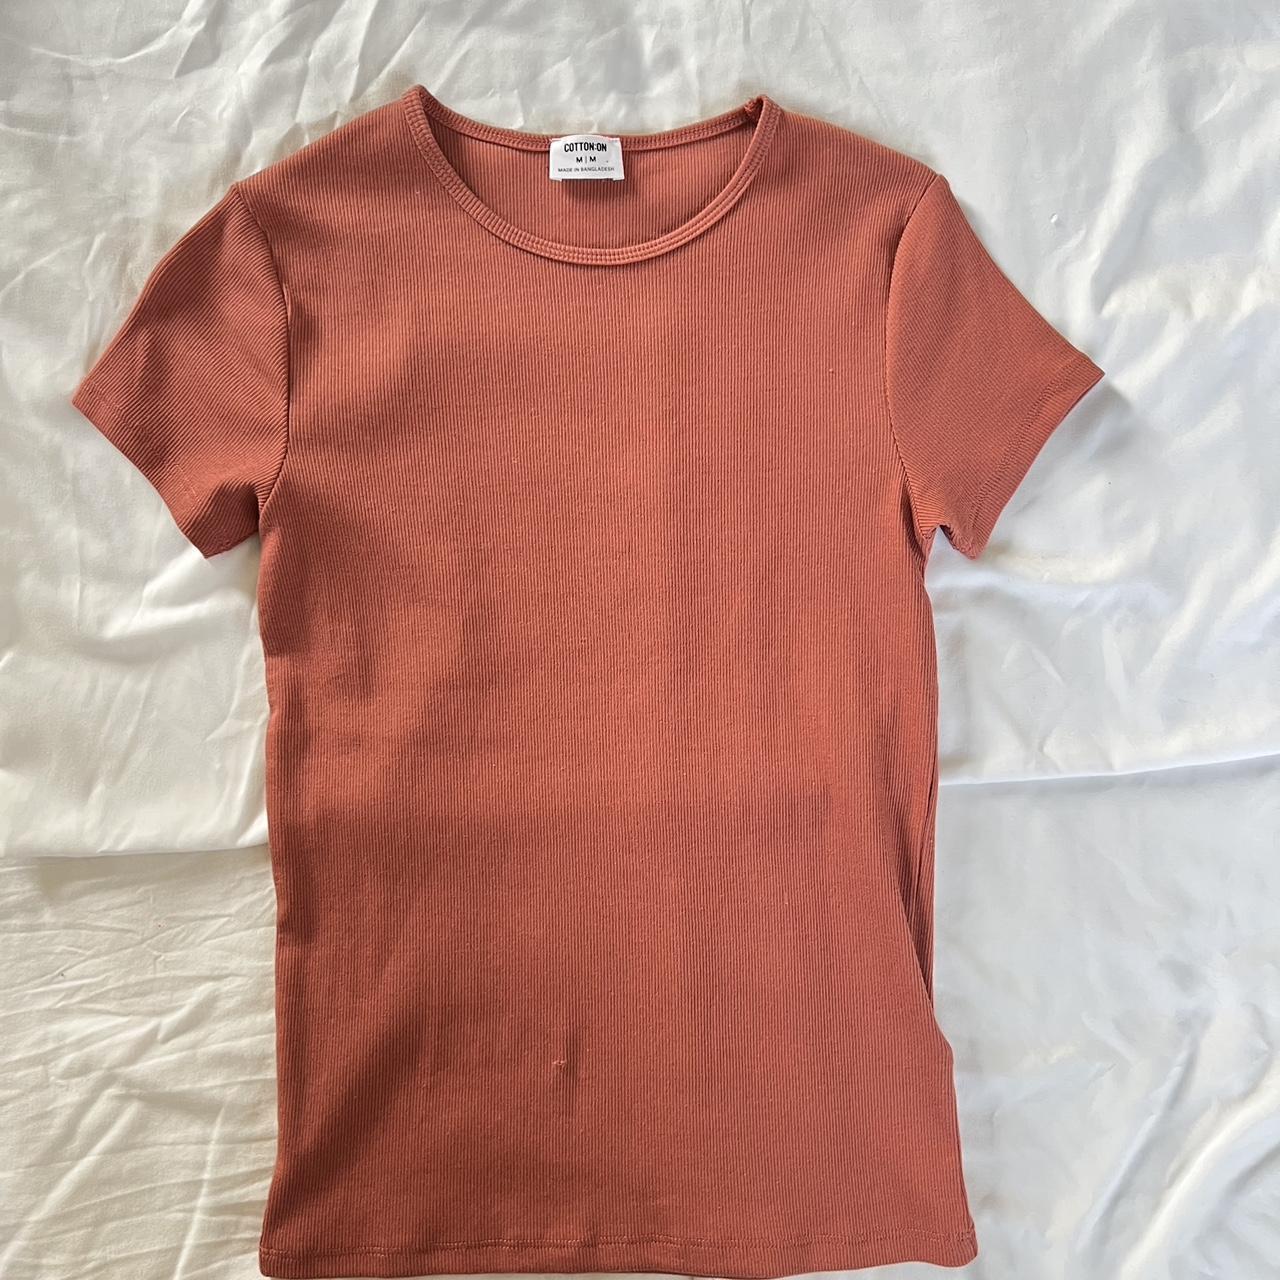 Cotton On Women's Orange and Cream T-shirt (4)